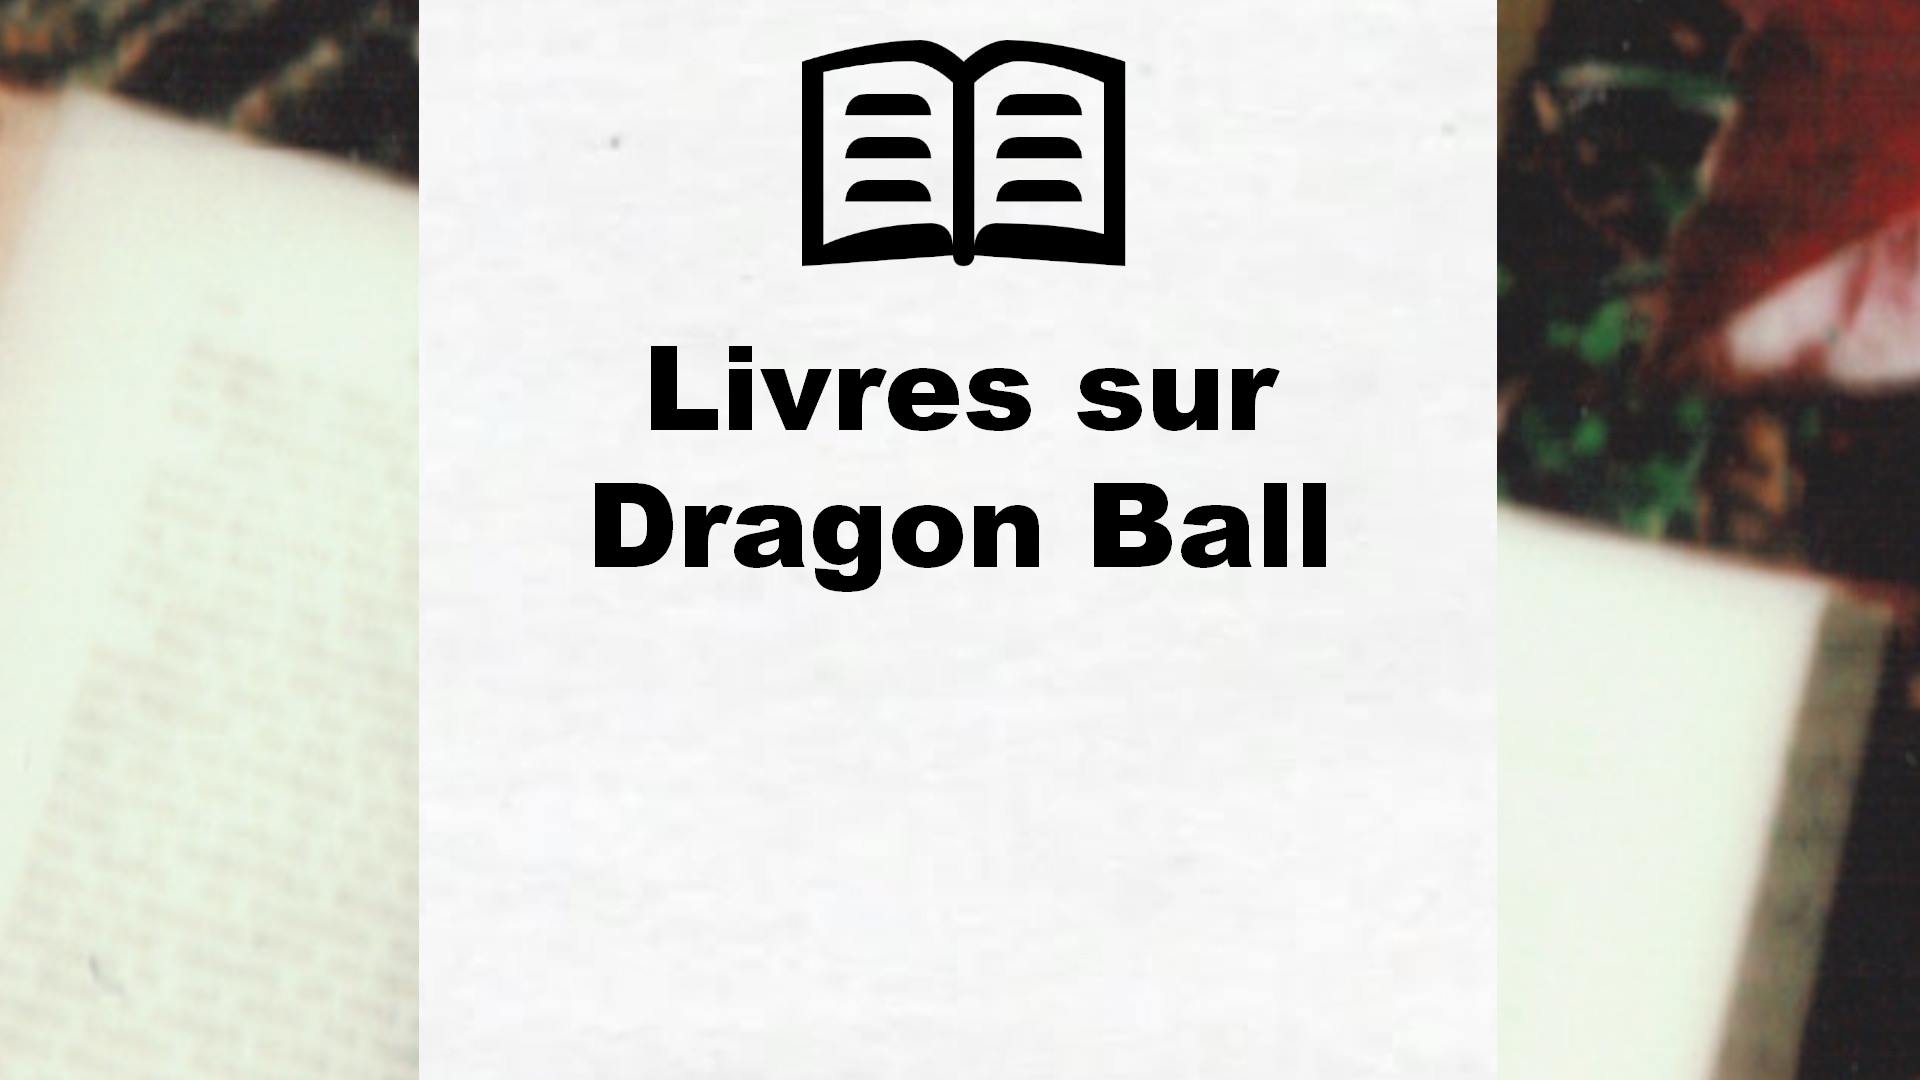 Livres sur Dragon Ball